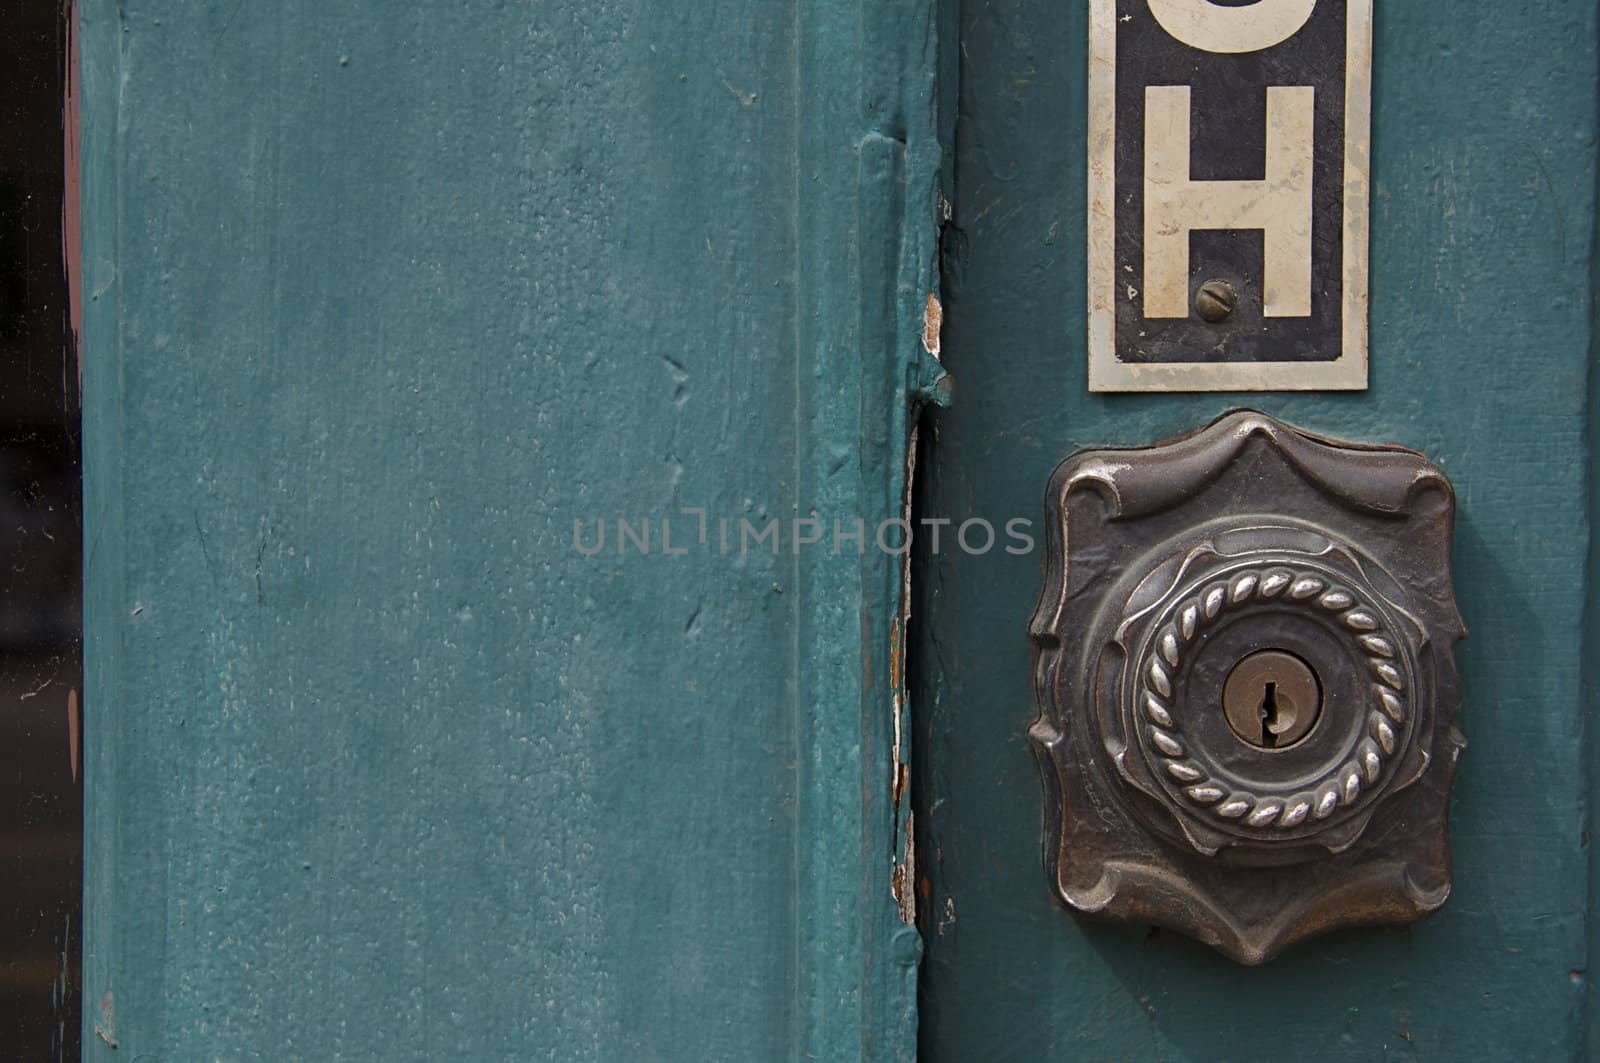 An old green door has a distinct metal lock.